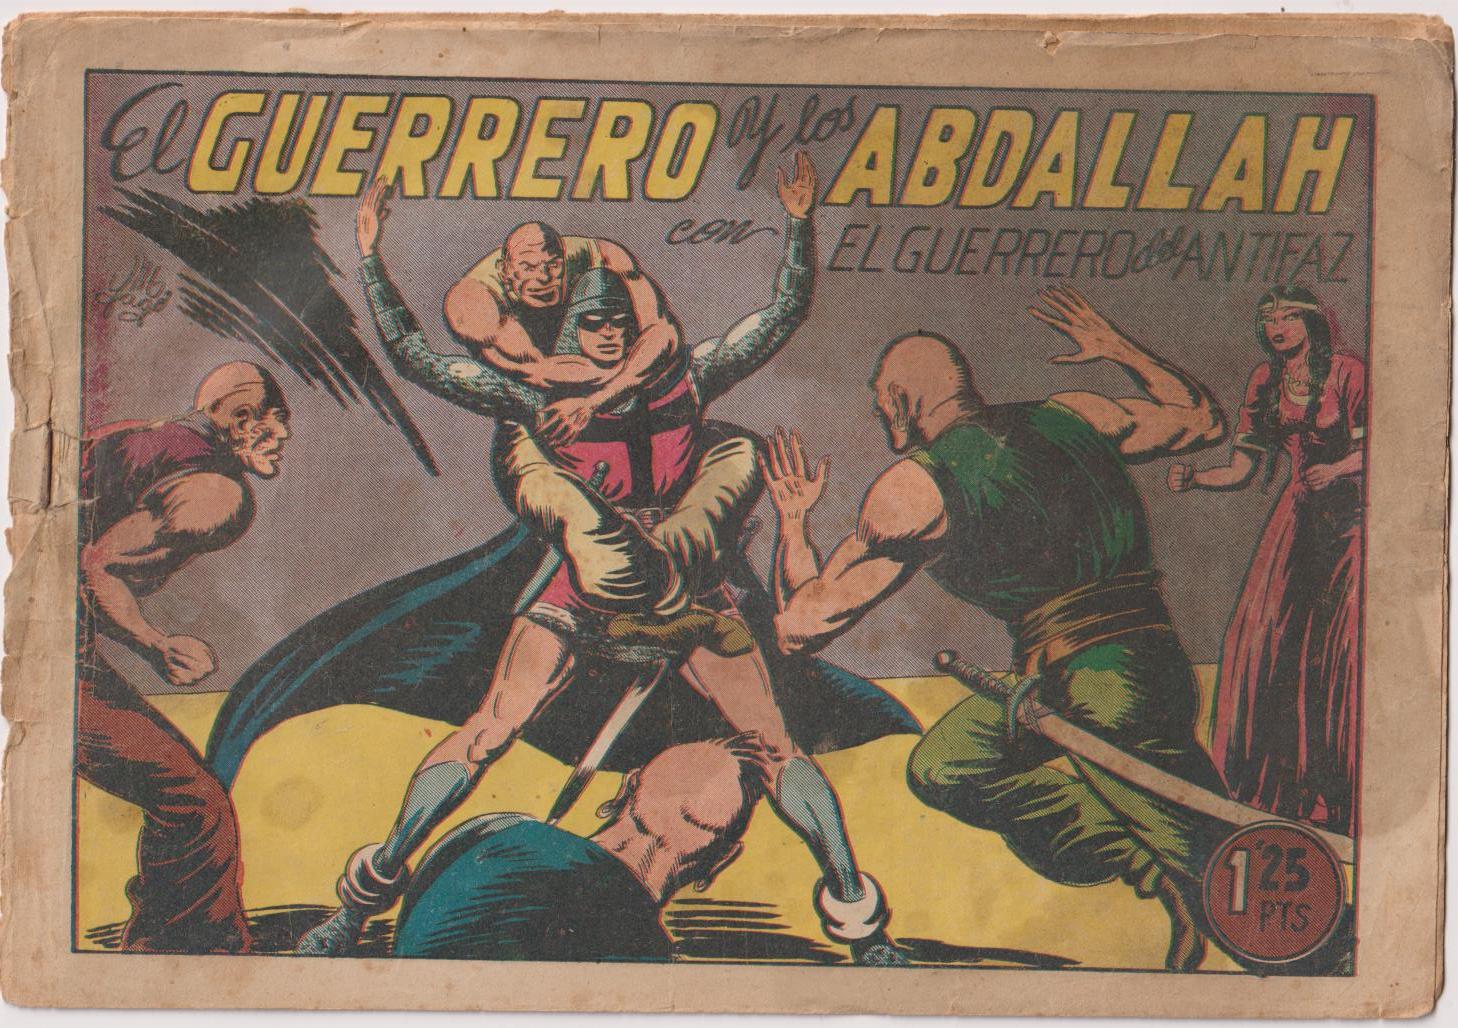 El Guerrero del Antifaz nº 116. Valenciana 1943